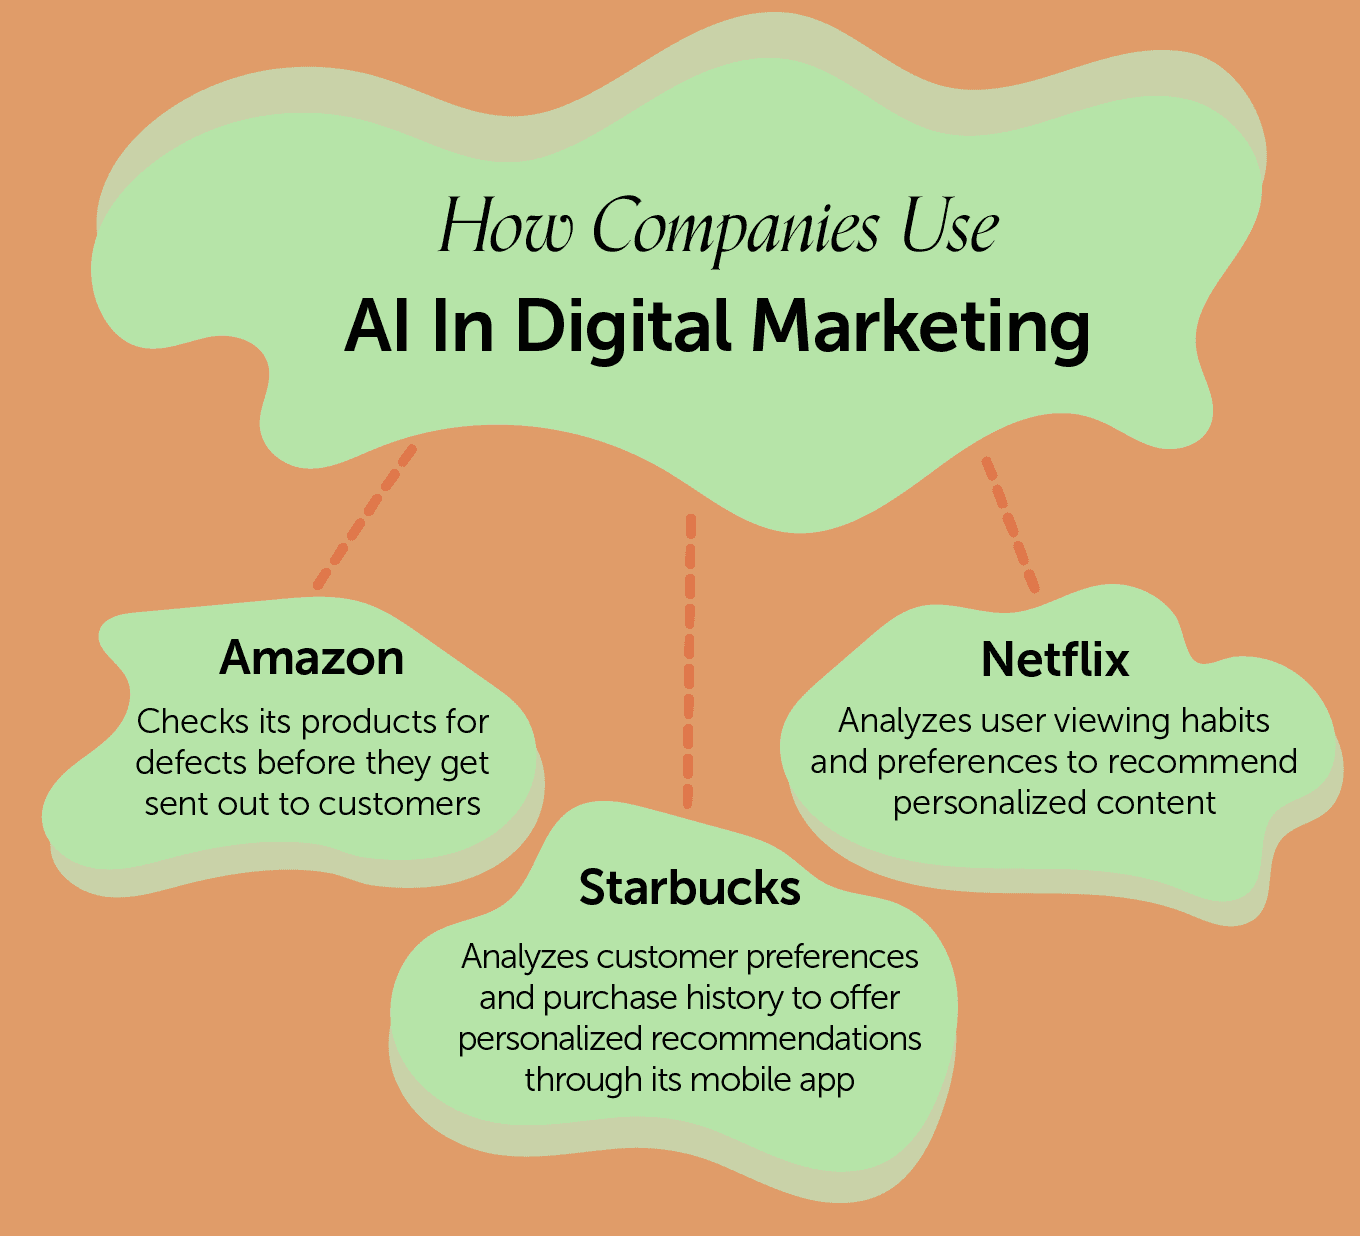 How Amazon, Starbucks, and Netflix uses AI digital marketing 